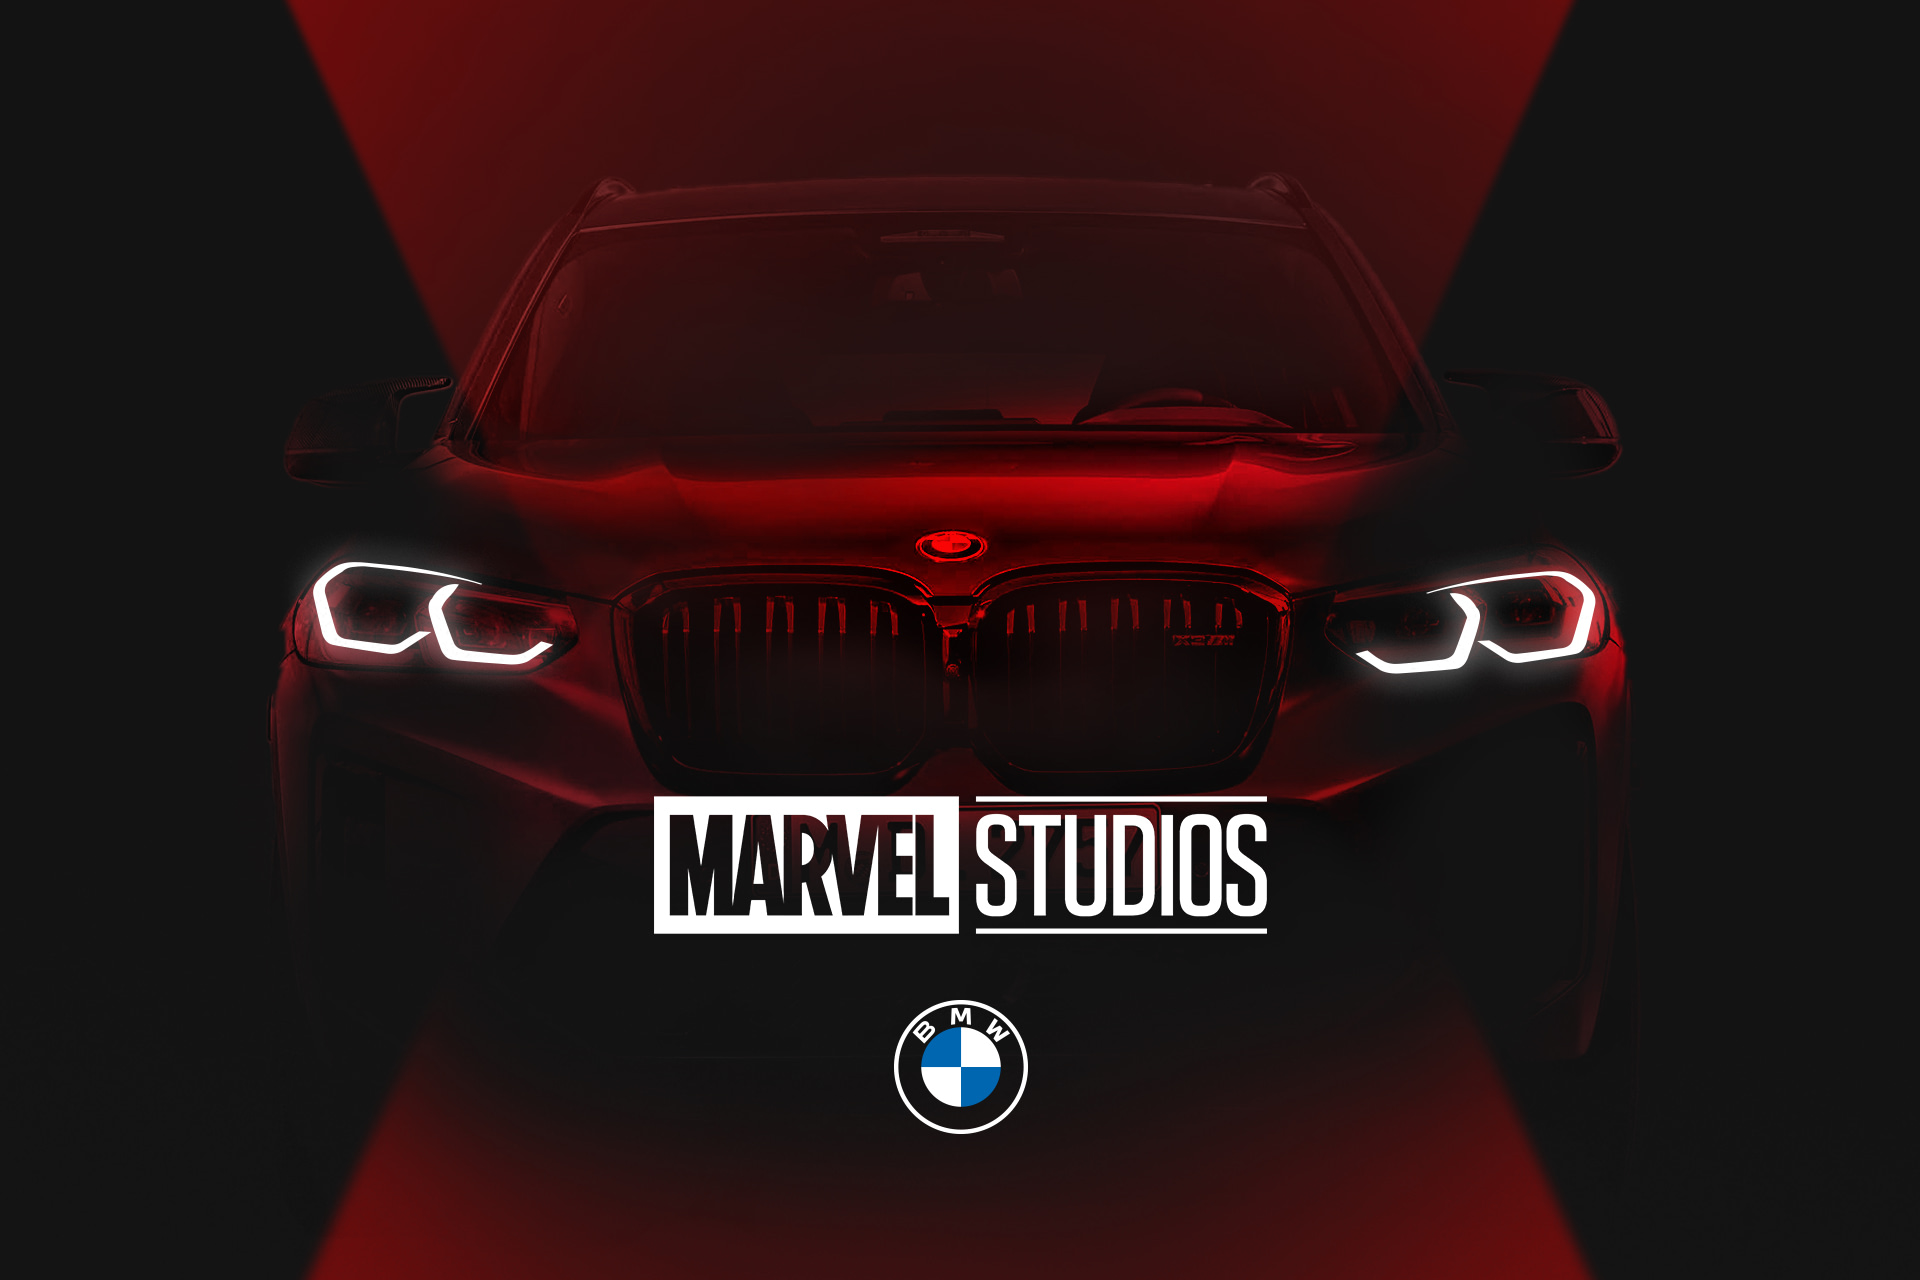 BMW x Marvel Studios